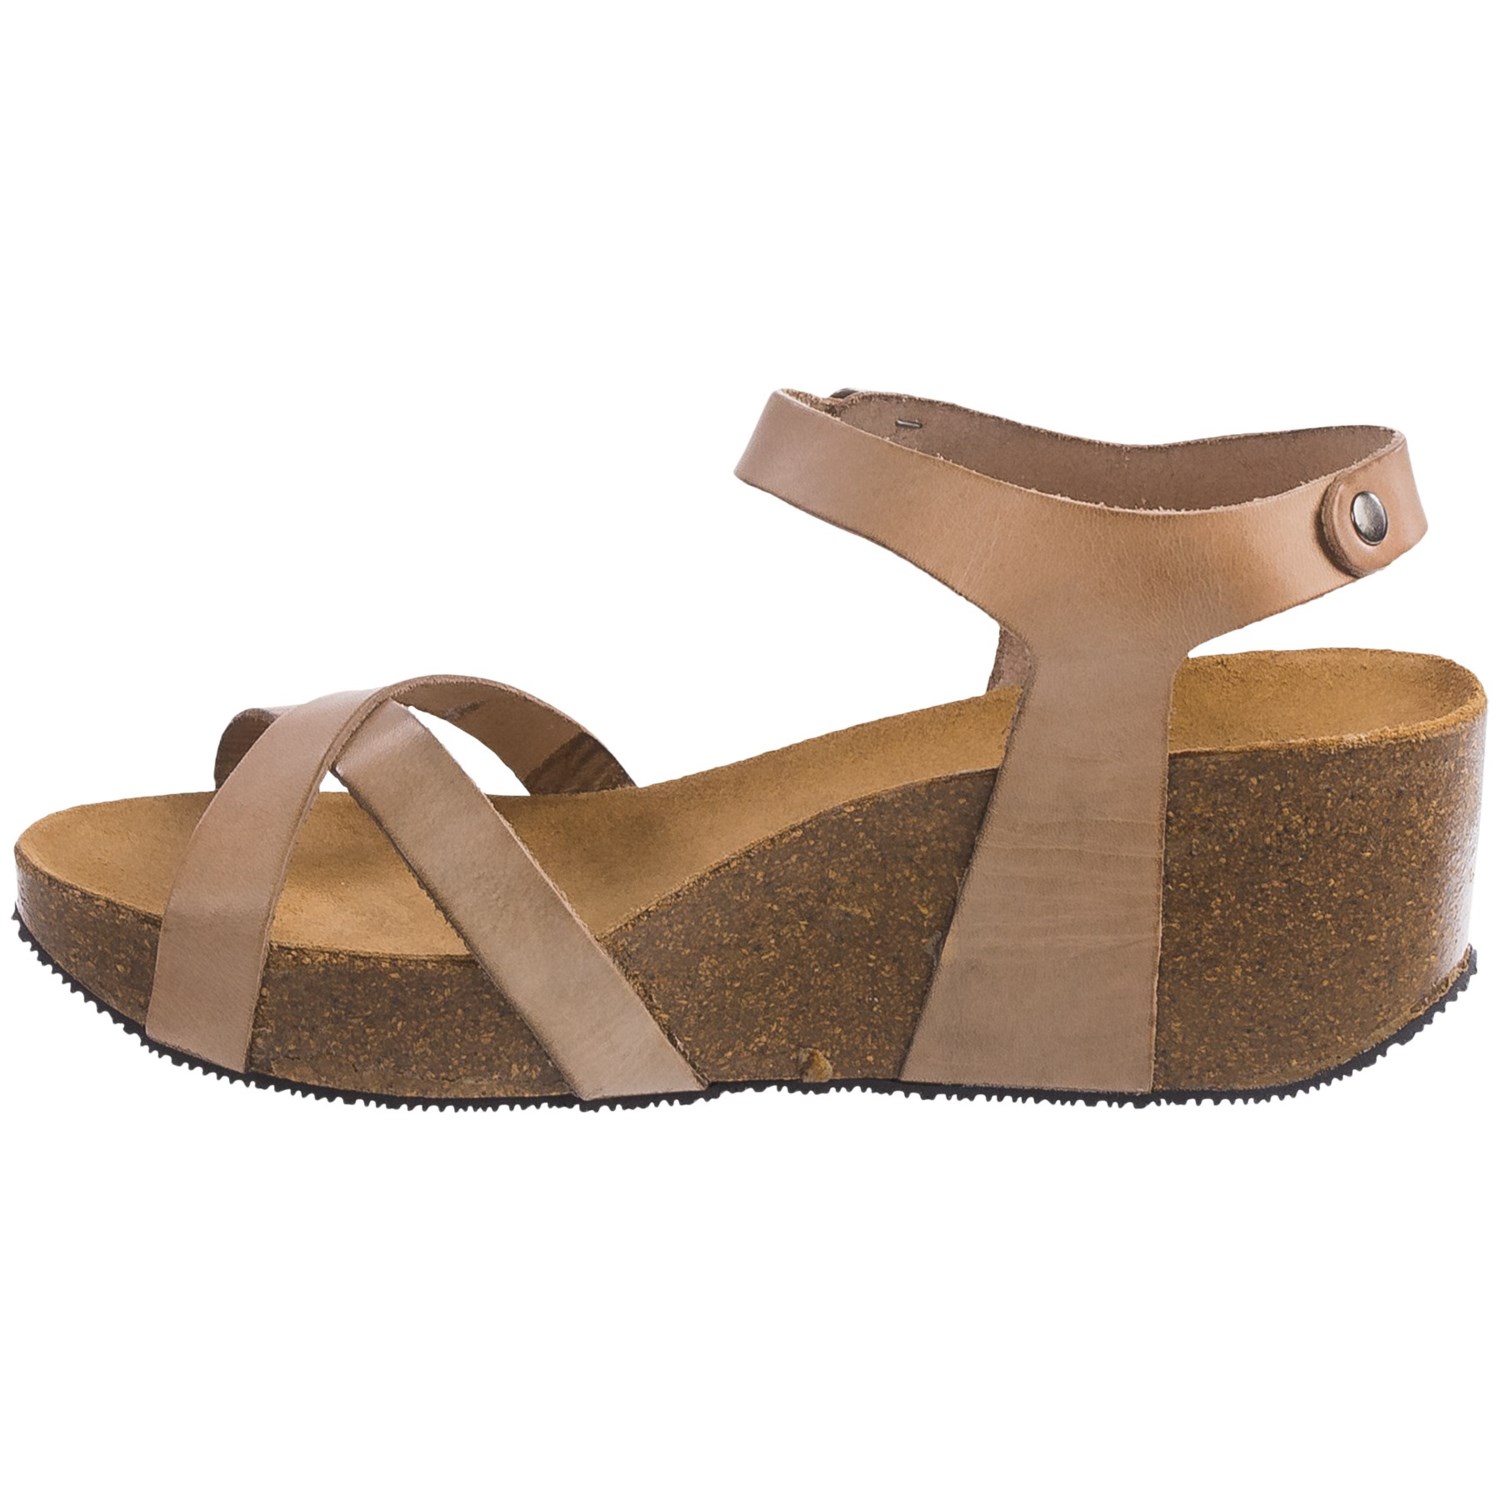 Lola Sabbia for Eric Michael Veda Platform Sandals (For Women) - Save 60%